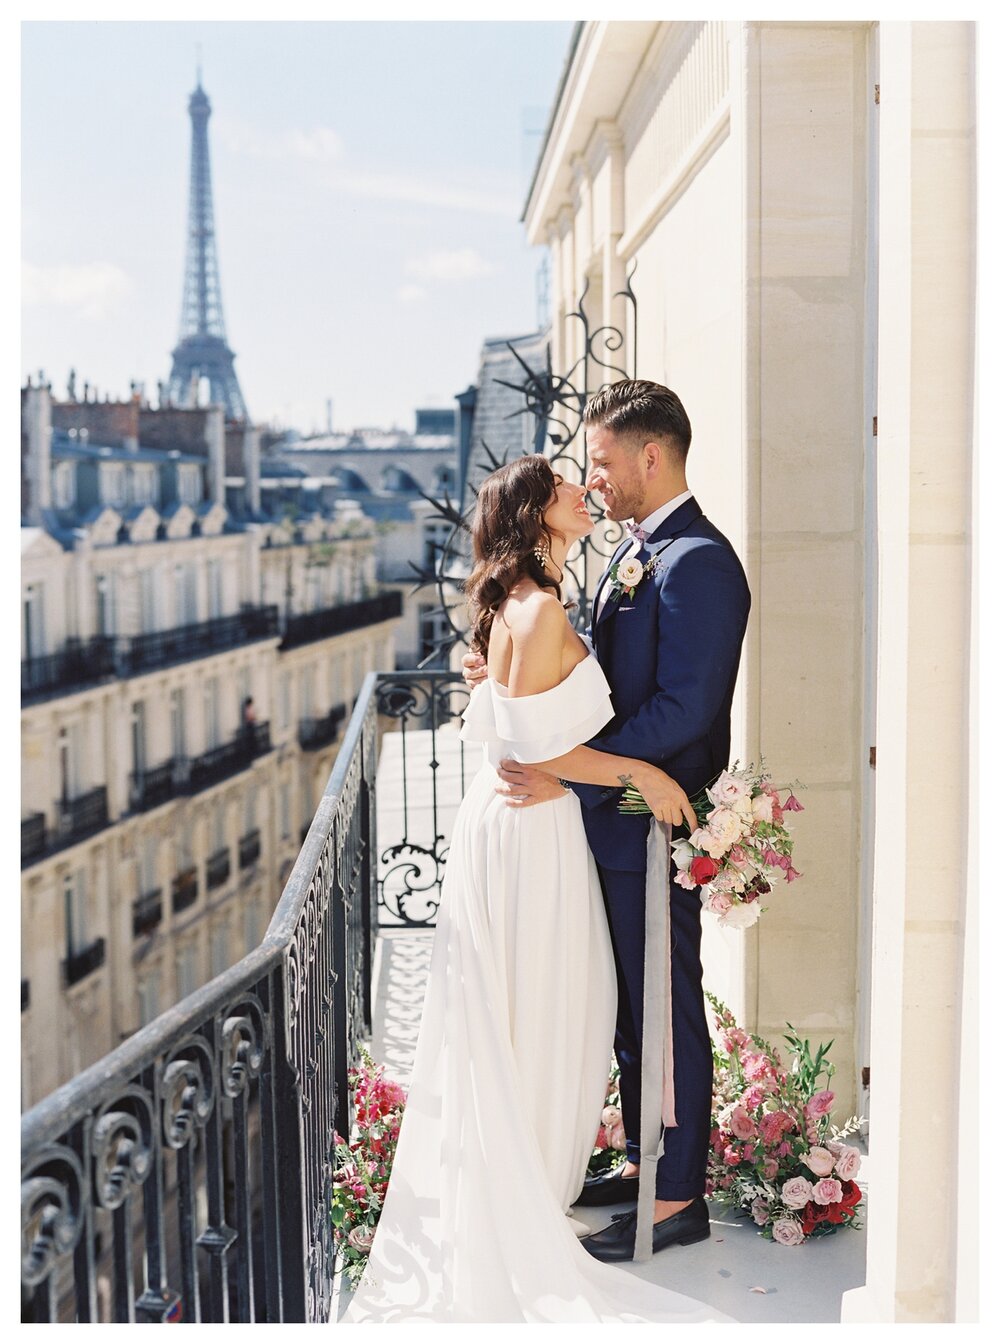  Eiffel tower balcony view, Paris balcony, Paris wedding, wedding flowers decor, Paris balcony photos, bride and groom 